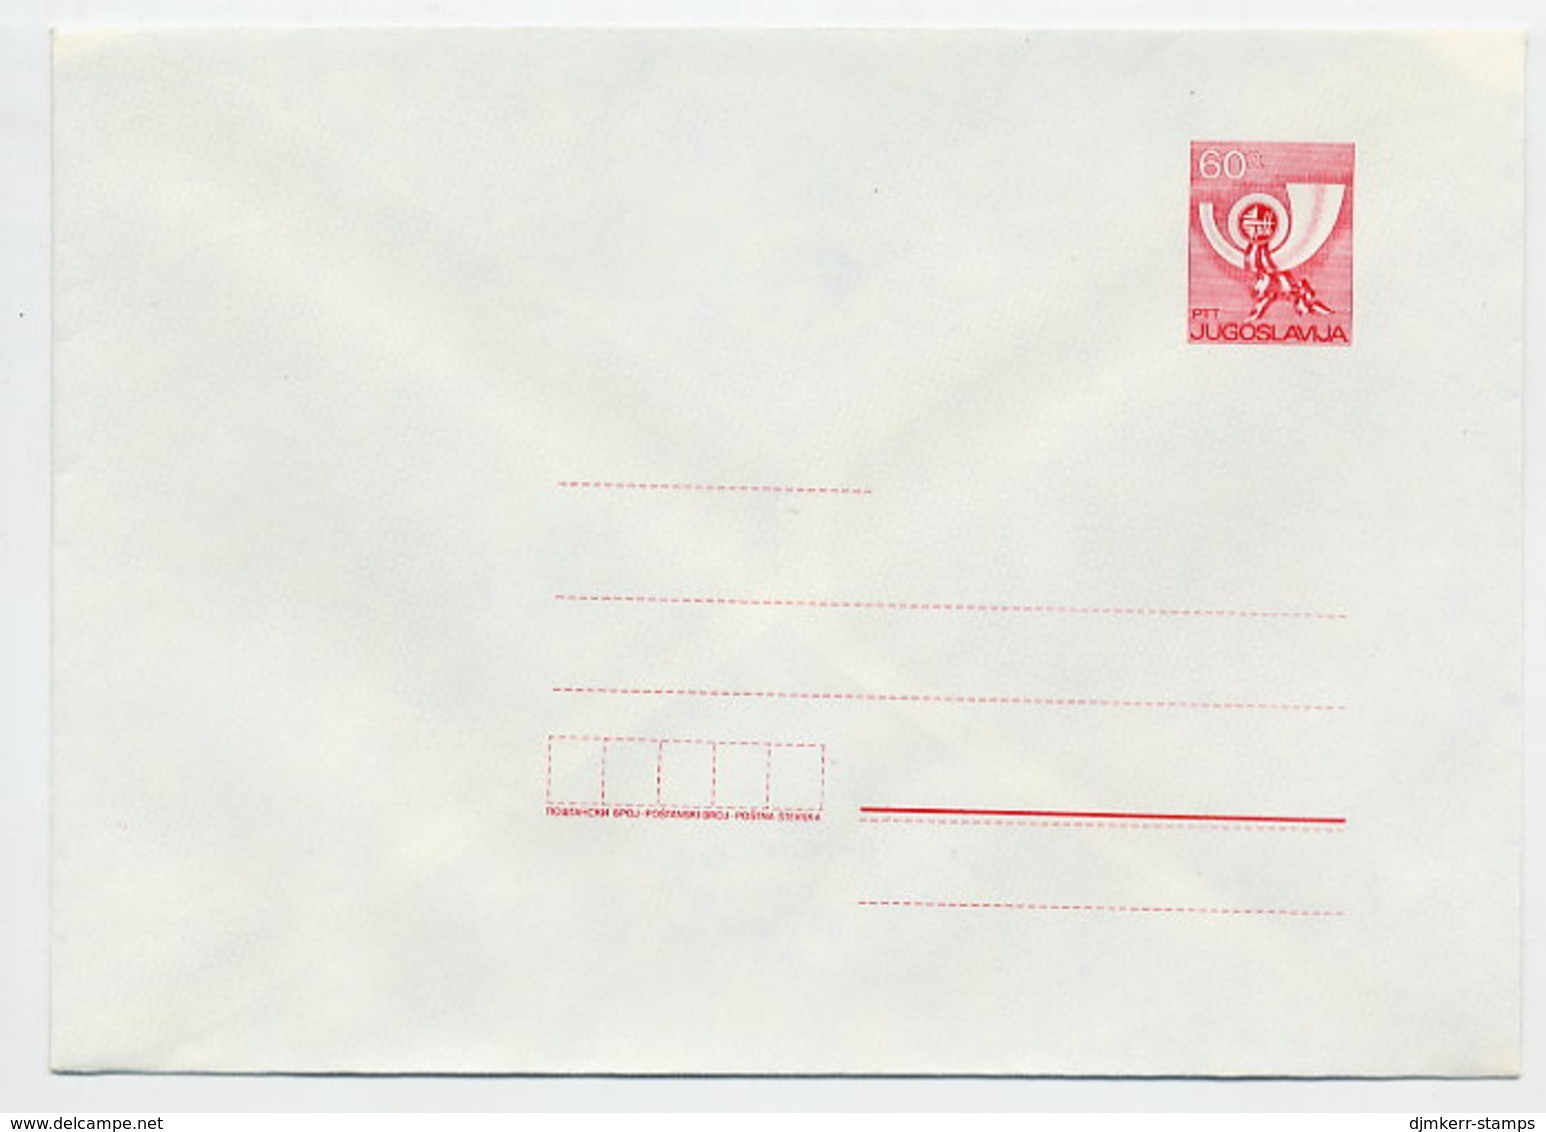 YUGOSLAVIA 1987 Posthorn 60 D. Envelope, Unused. Michel U77 - Interi Postali